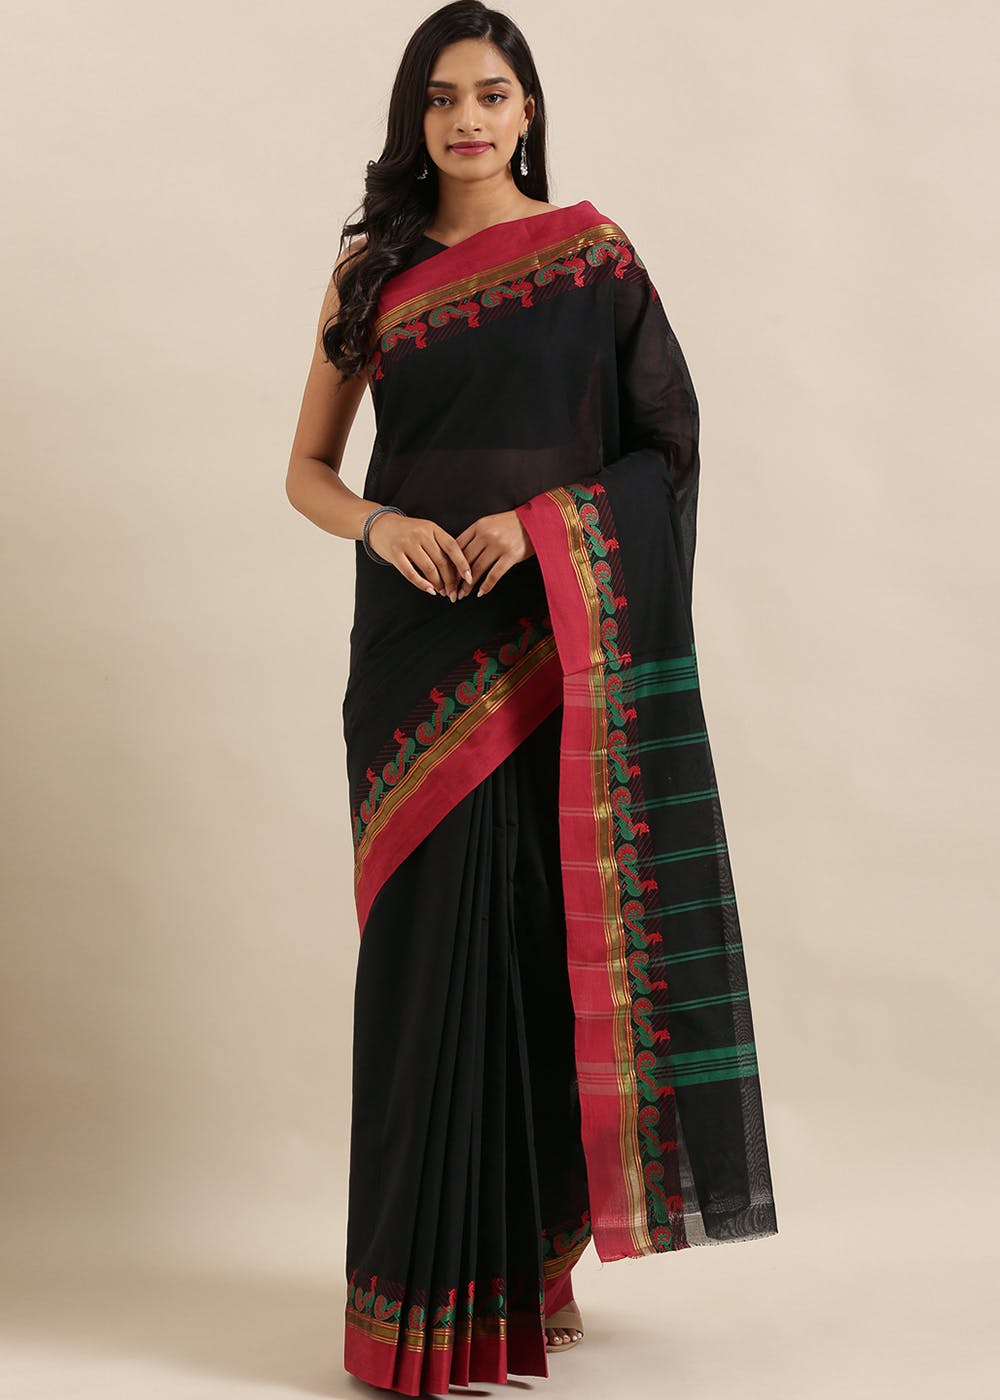 Get Peacock Trim Detail Black Chettinad Cotton Saree at ₹ 1199 | LBB Shop